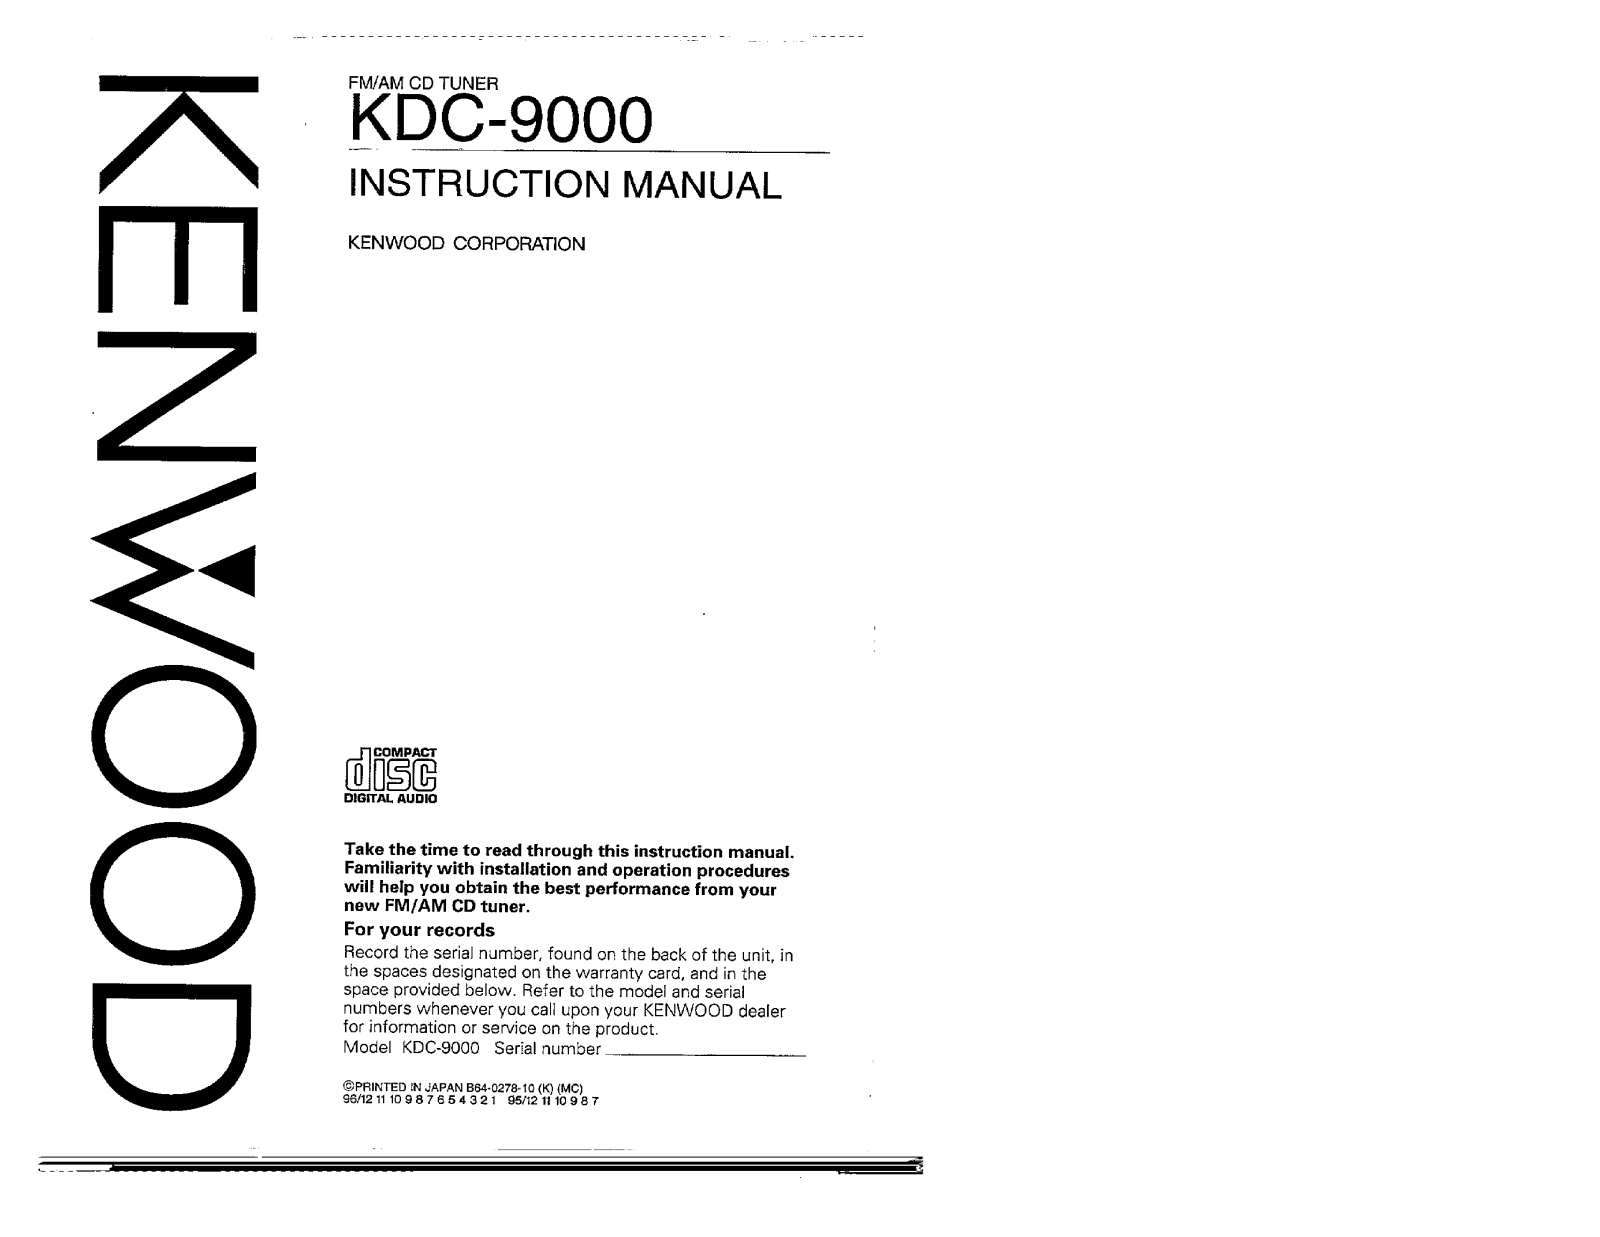 Kenwood KDC-9000 Owner's Manual